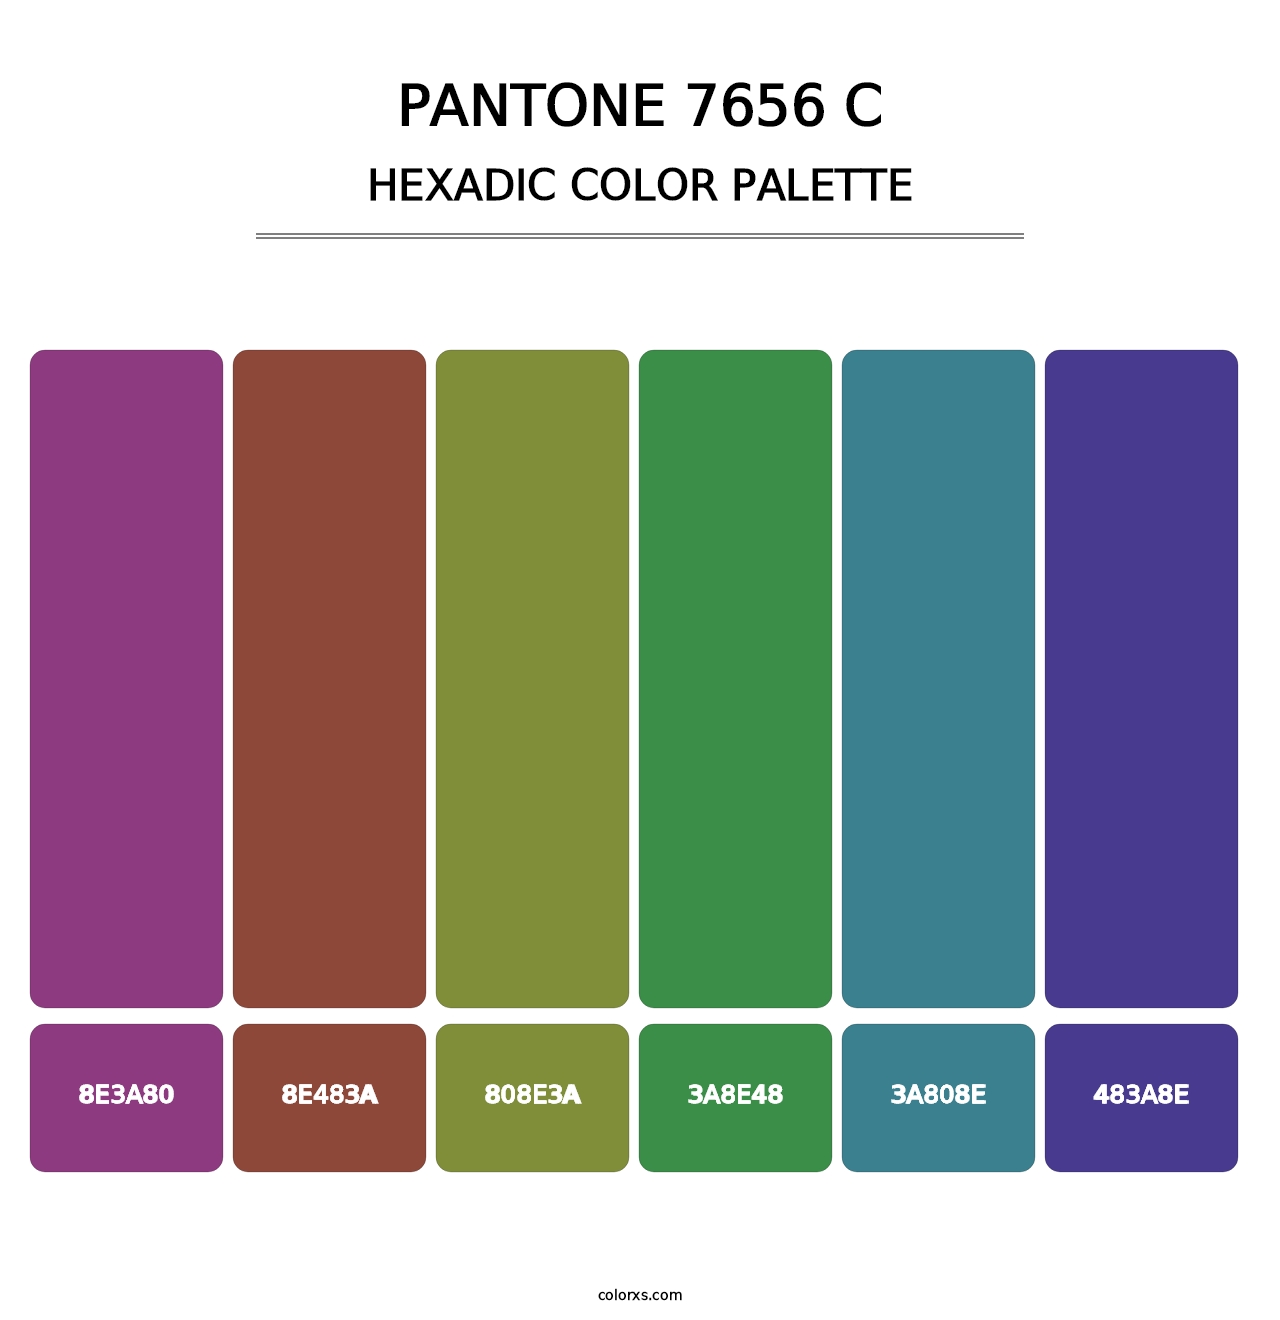 PANTONE 7656 C - Hexadic Color Palette